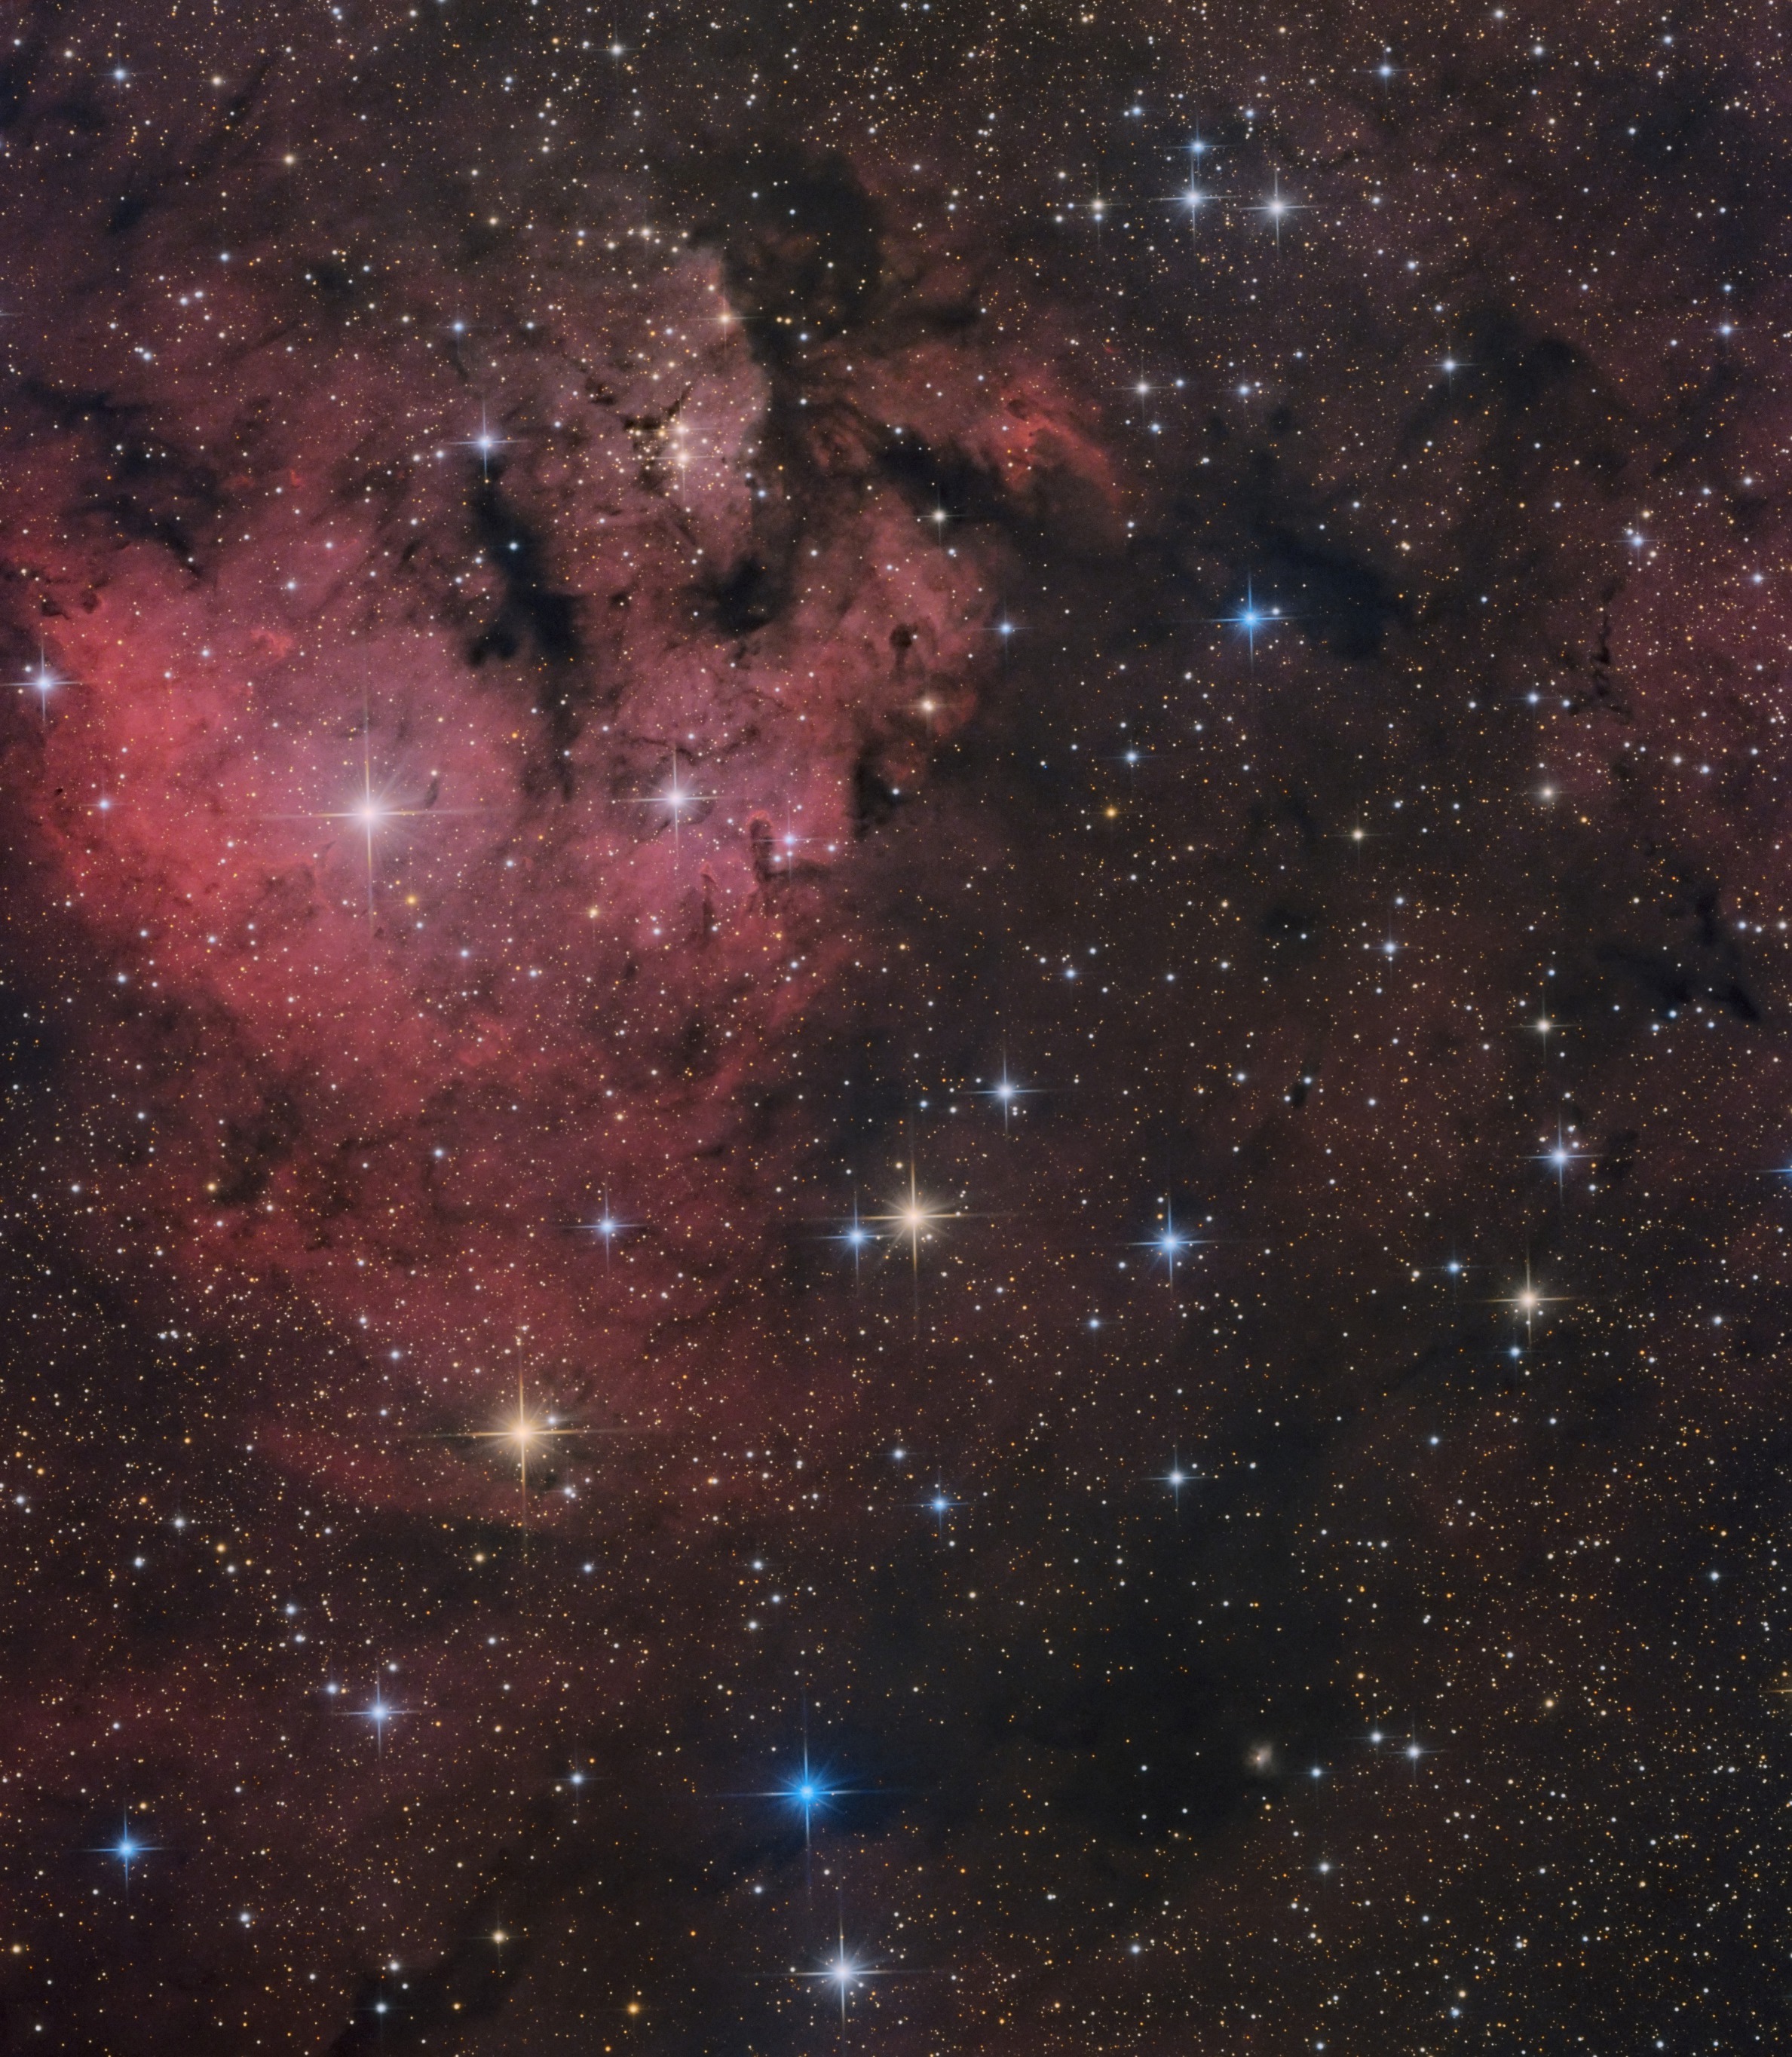 Ced-214 - Emission Nebula in Cepheus